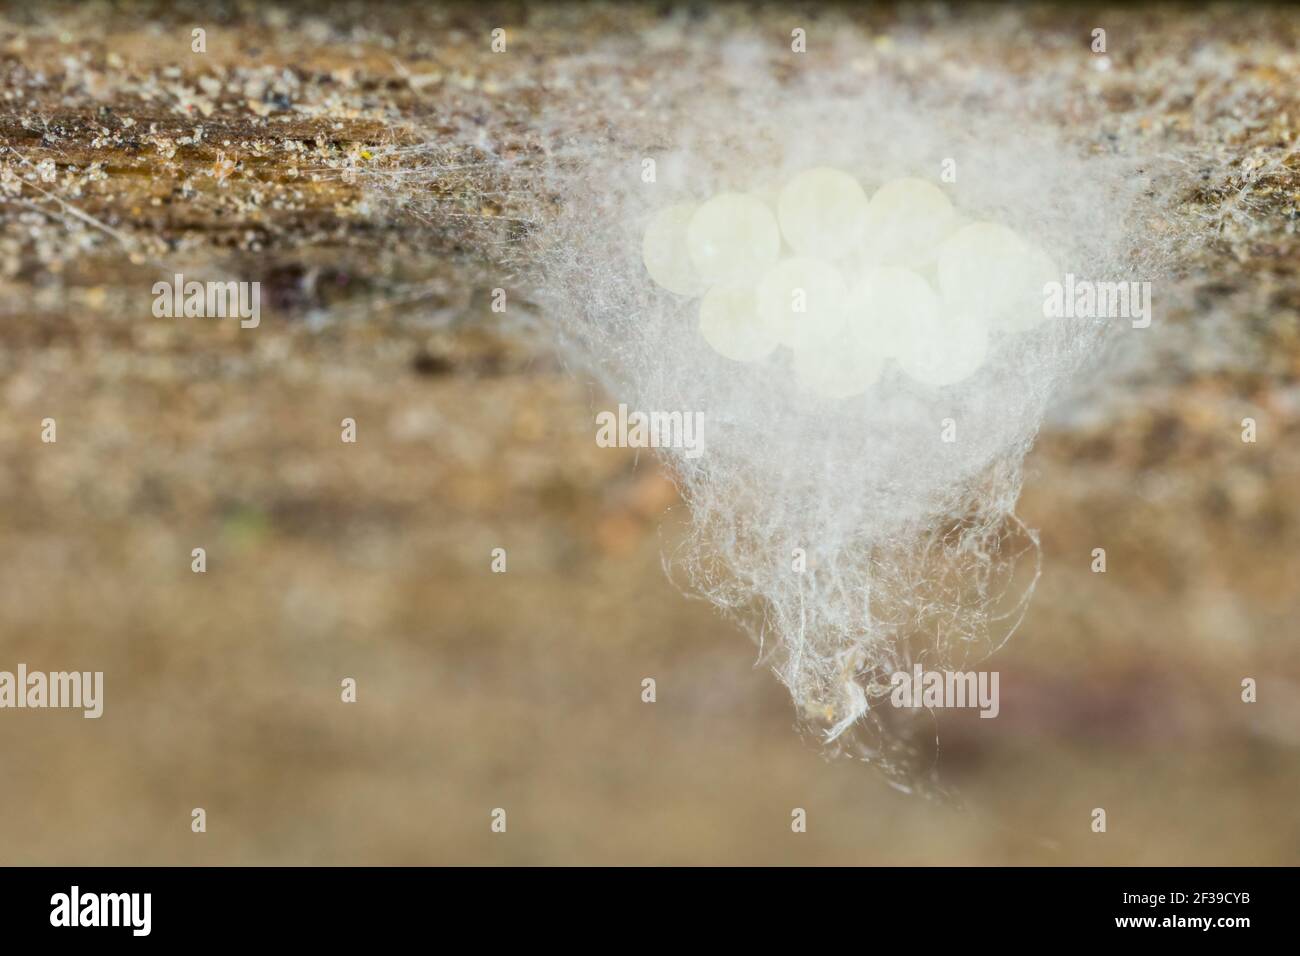 Saco de huevo de araña de tela-enredos (Theridiidae) Foto de stock